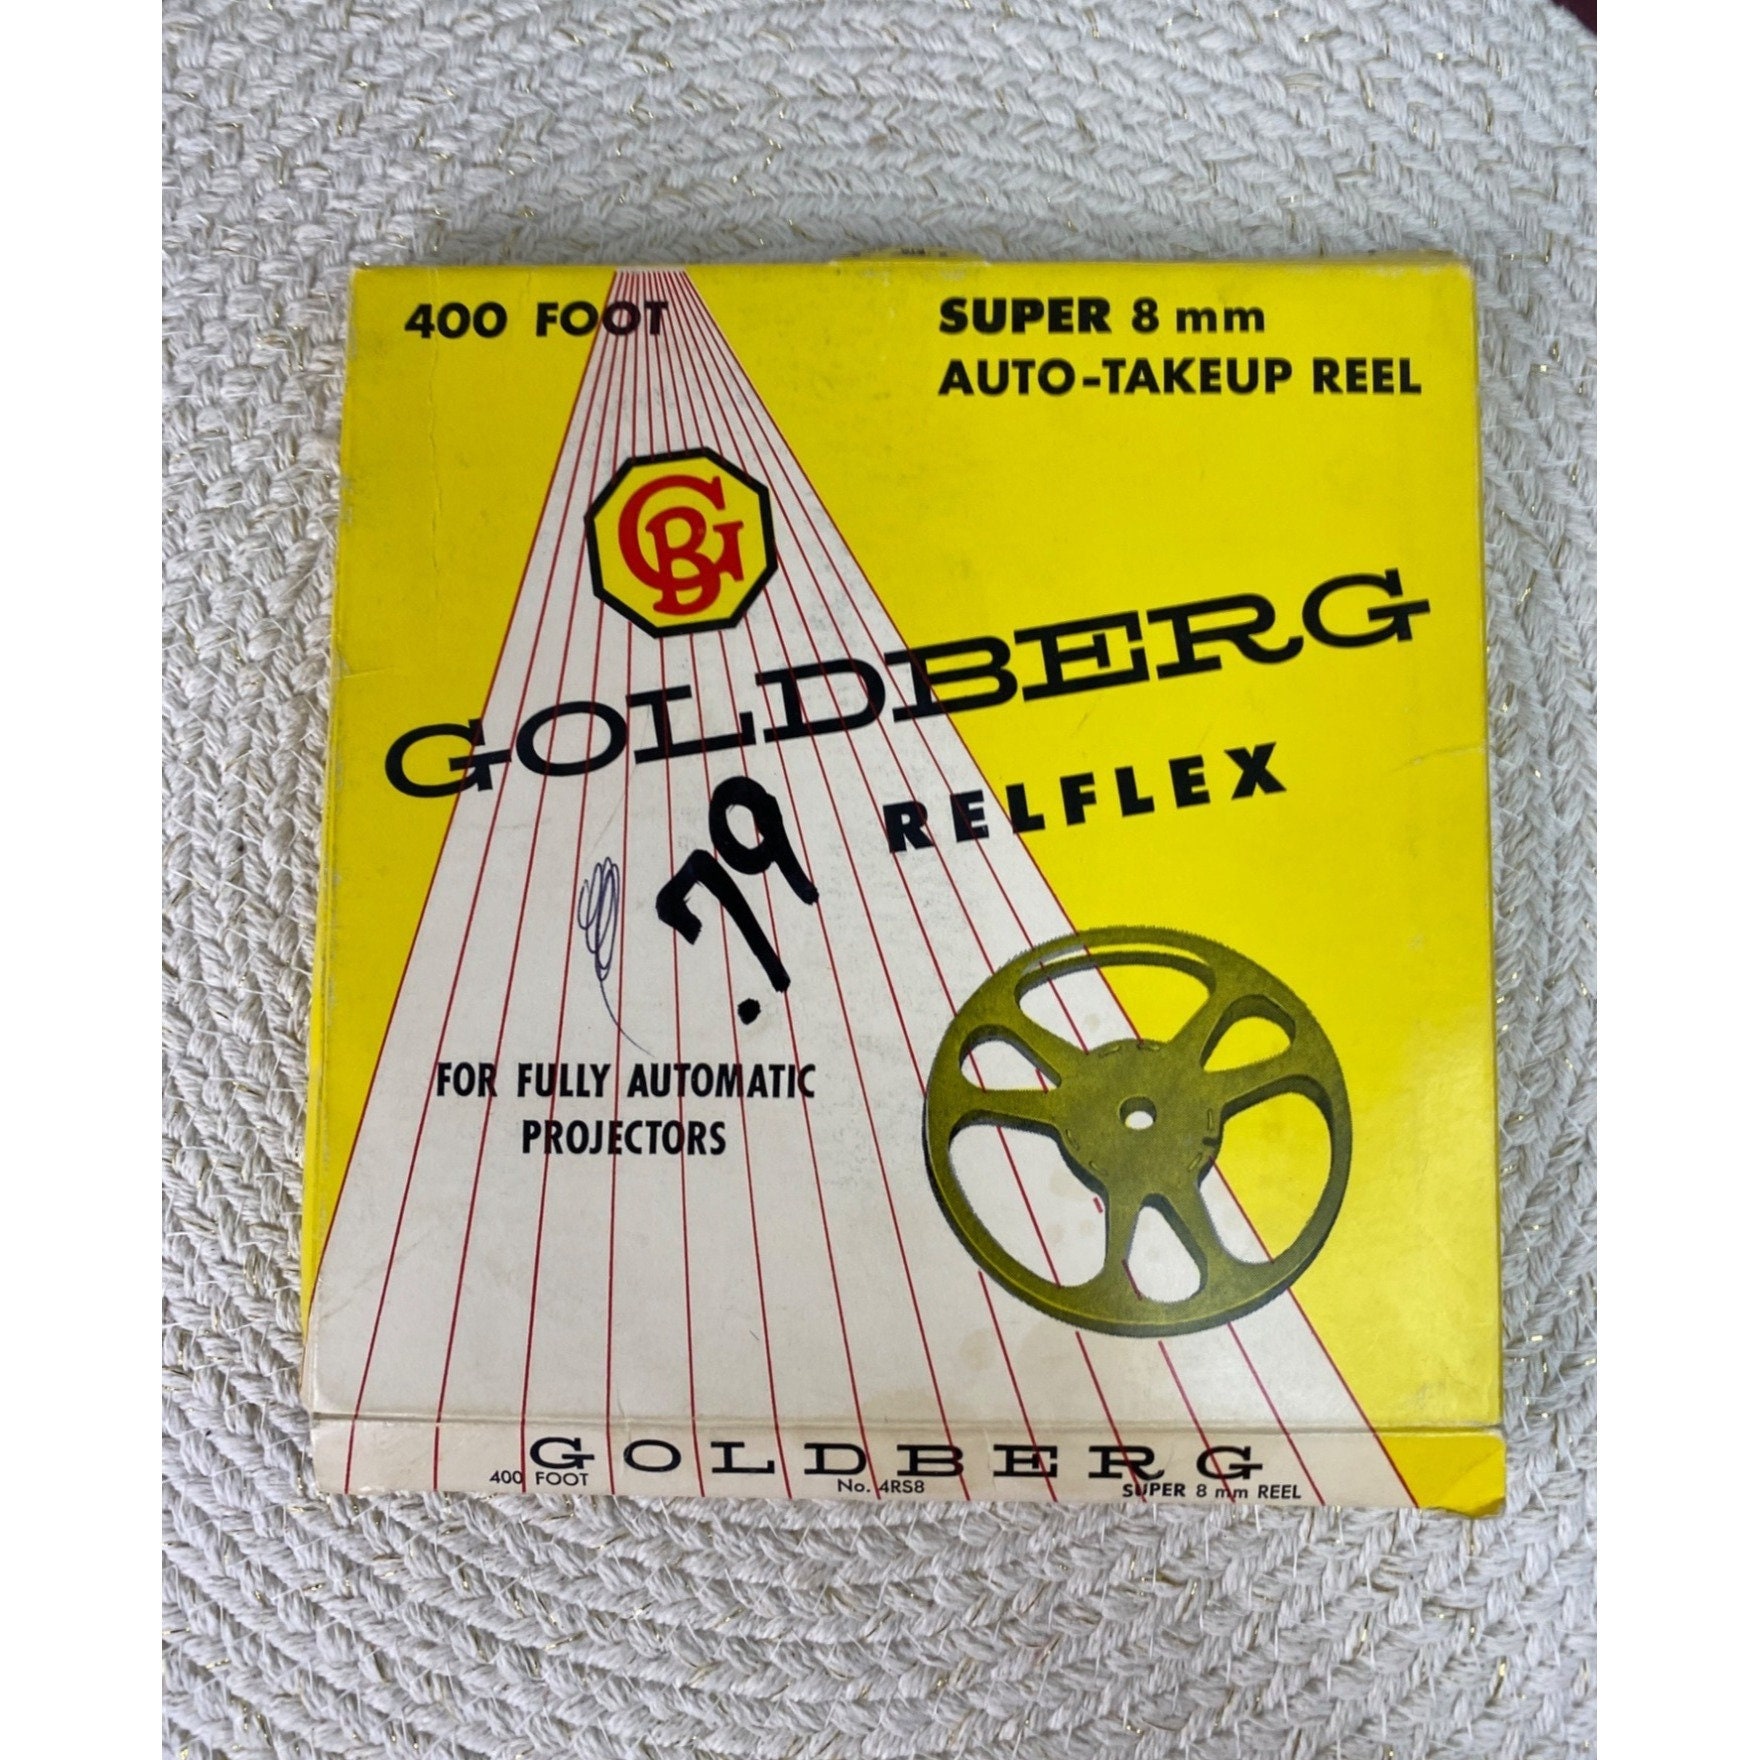 Goldberg Reflex Super 8 Auto Takeup Reel Movie Projector Reel in